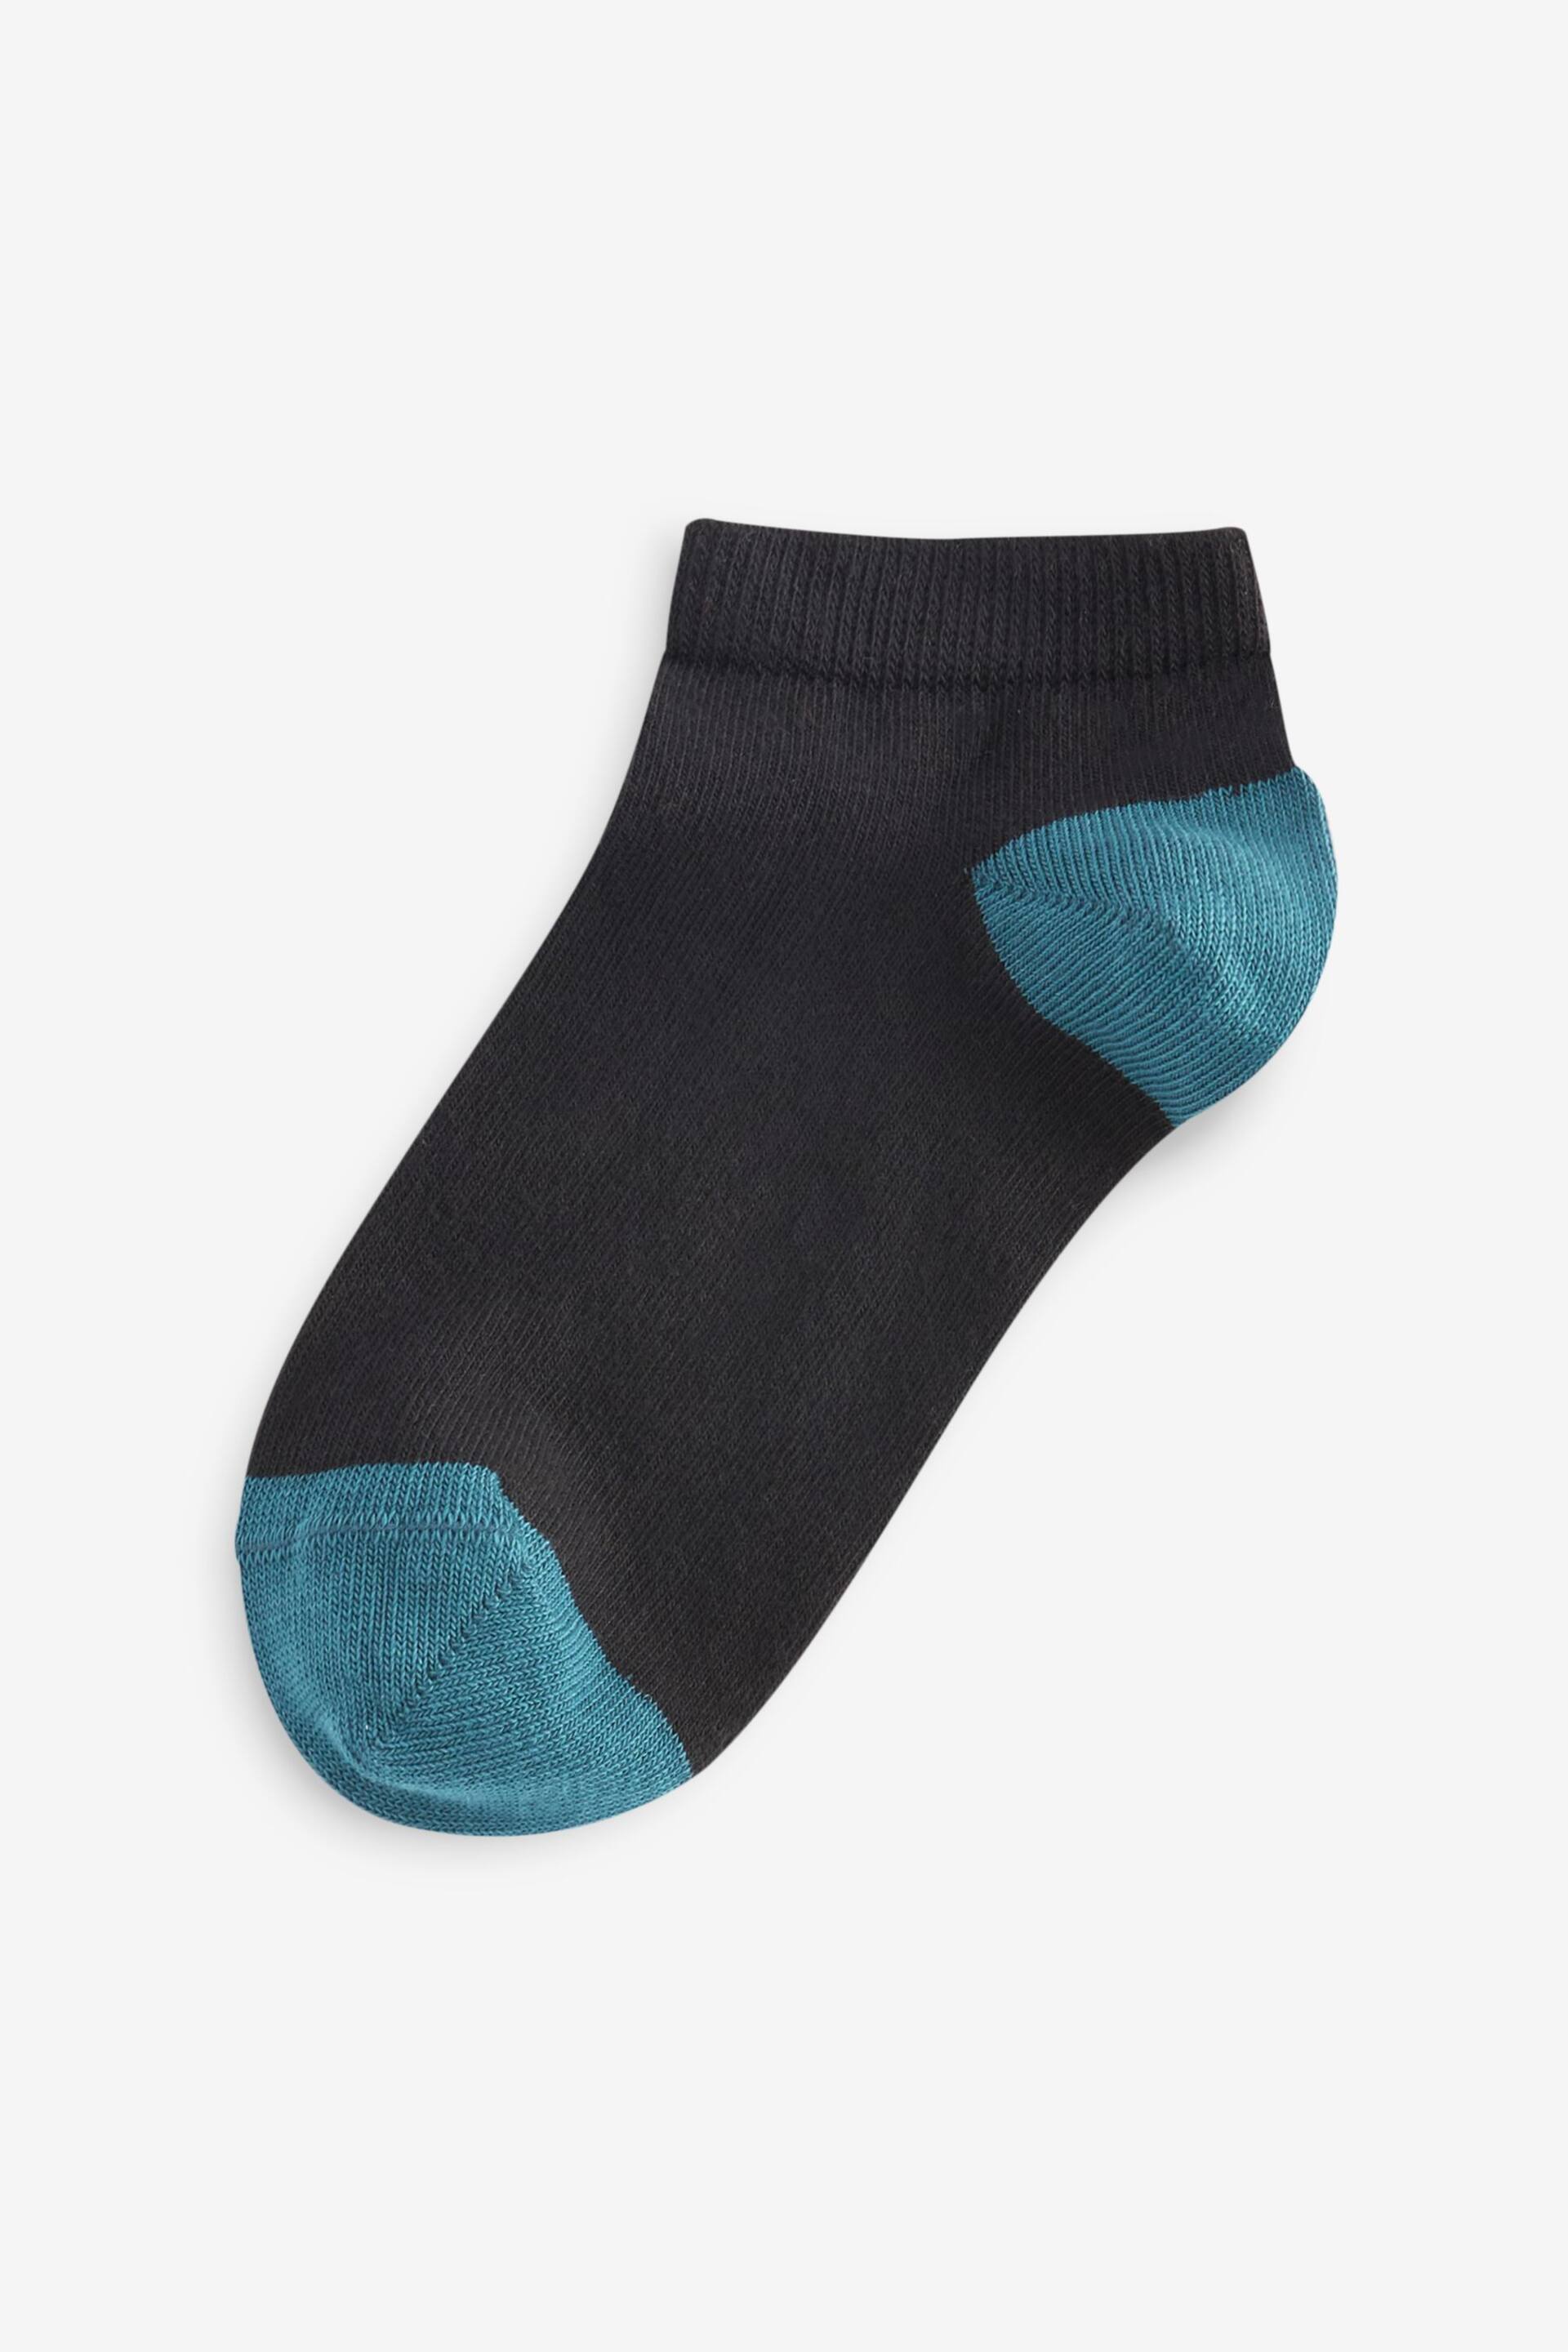 Colourblock Heel And Toe Trainer Socks 7 Pack - Image 2 of 8